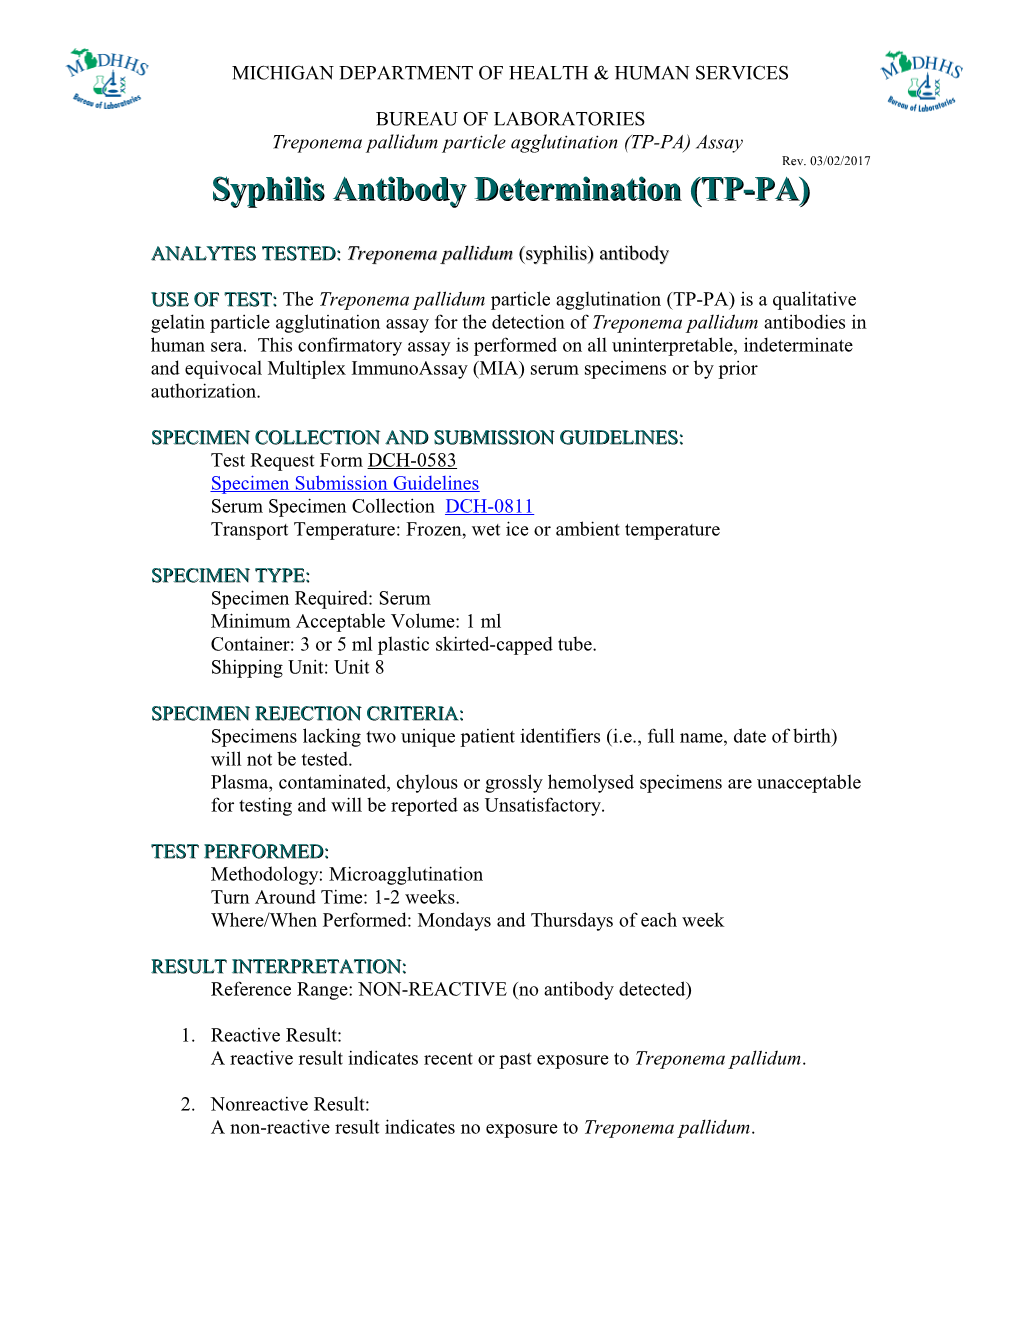 Treponema Pallidum Particle Agglutination (TP-PA) Assay